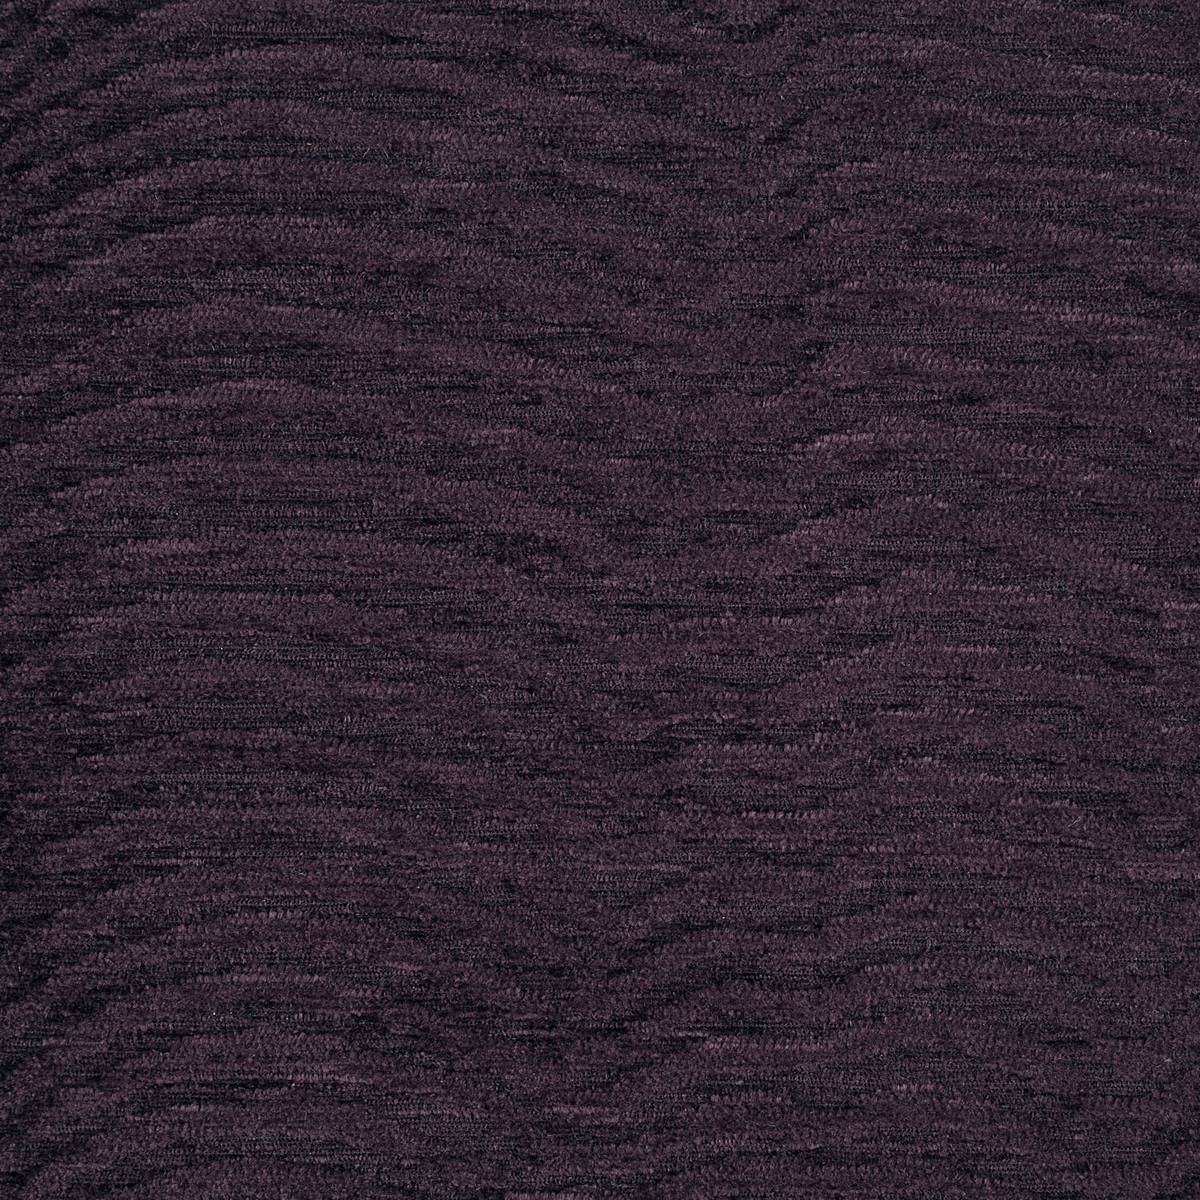 Waltz Plum Fabric by Harlequin